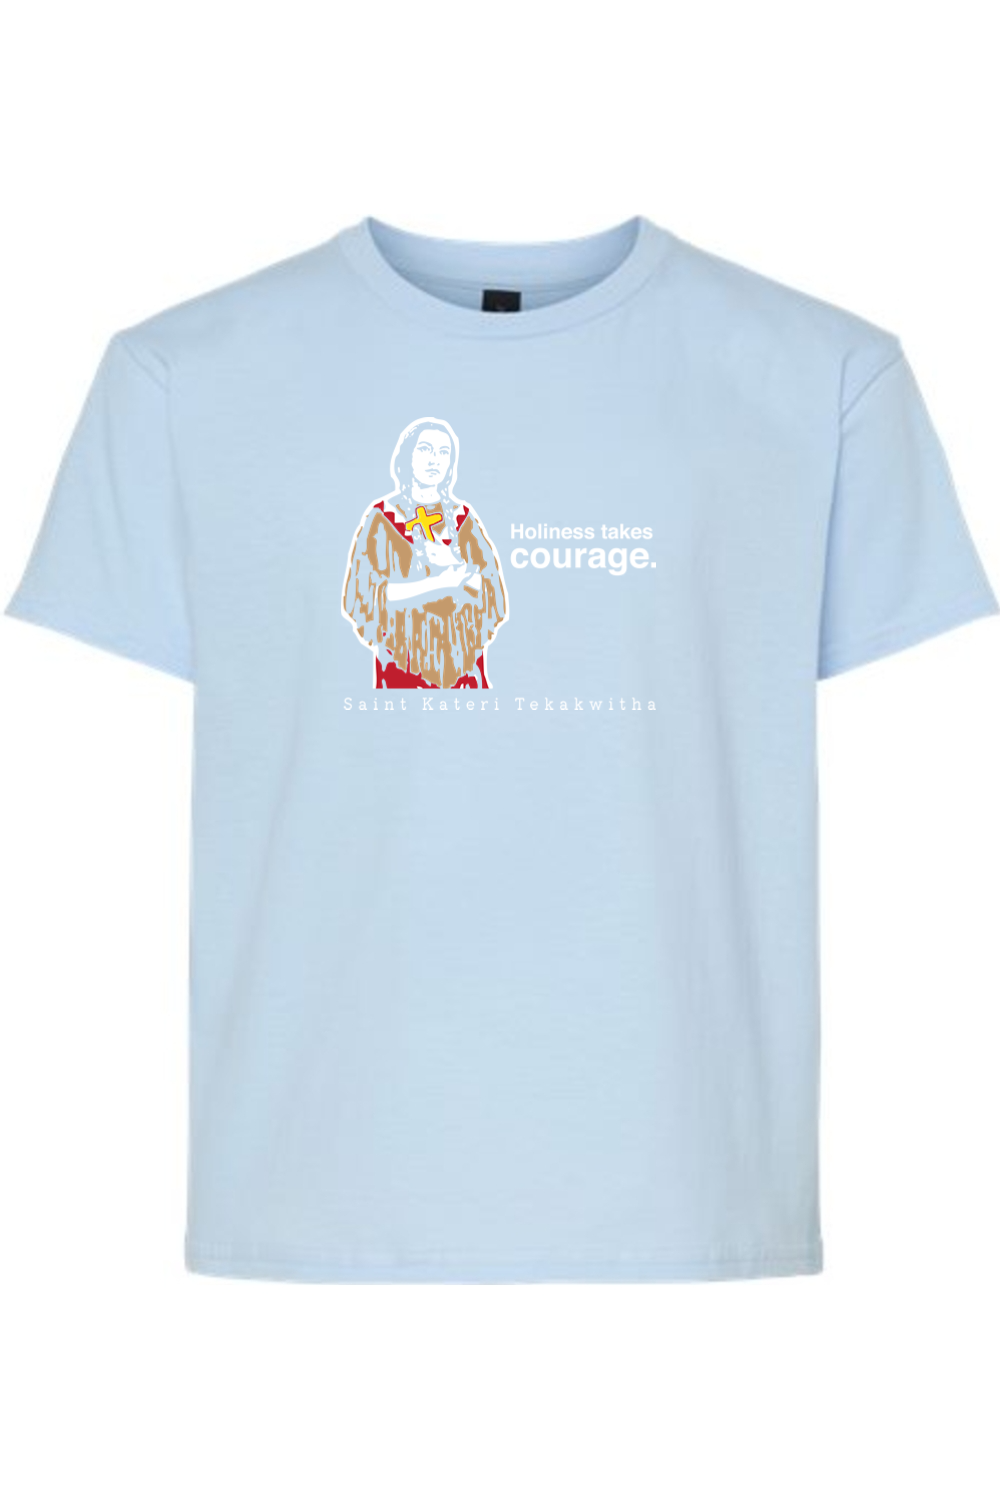 Holiness Takes Courage – St Kateri Tekakwitha Youth T-Shirt